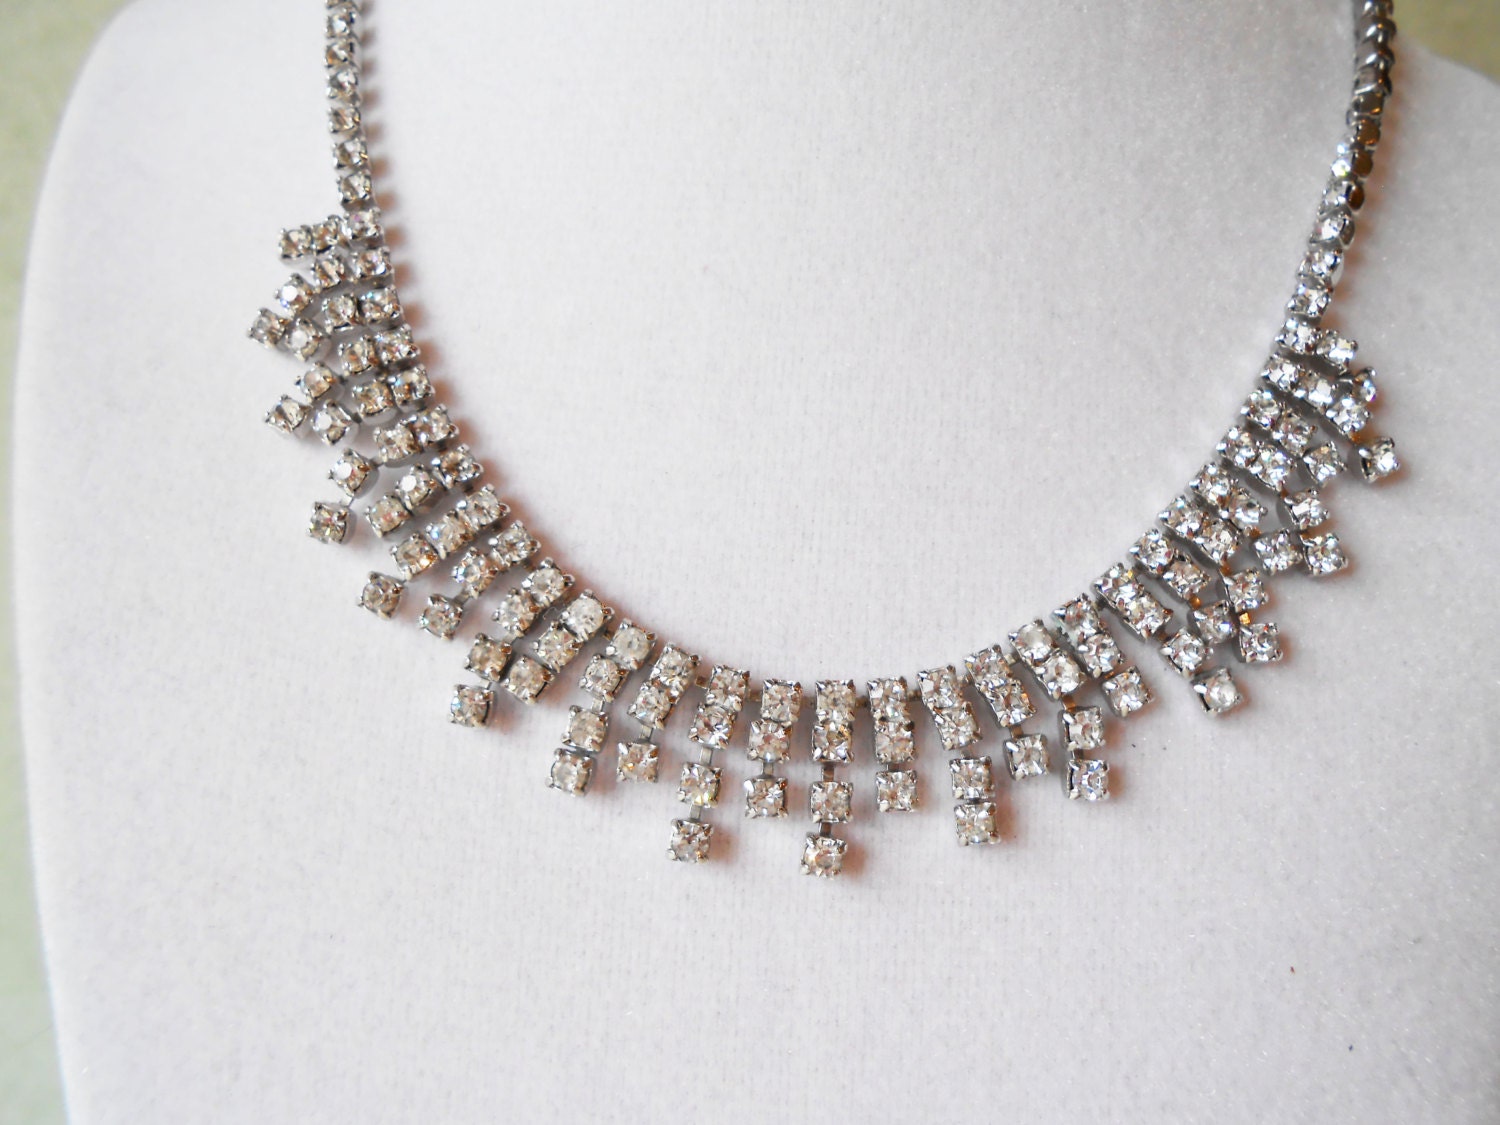 Dazzling Rhinestone Necklace Vintage Jewelry 1940s Formal